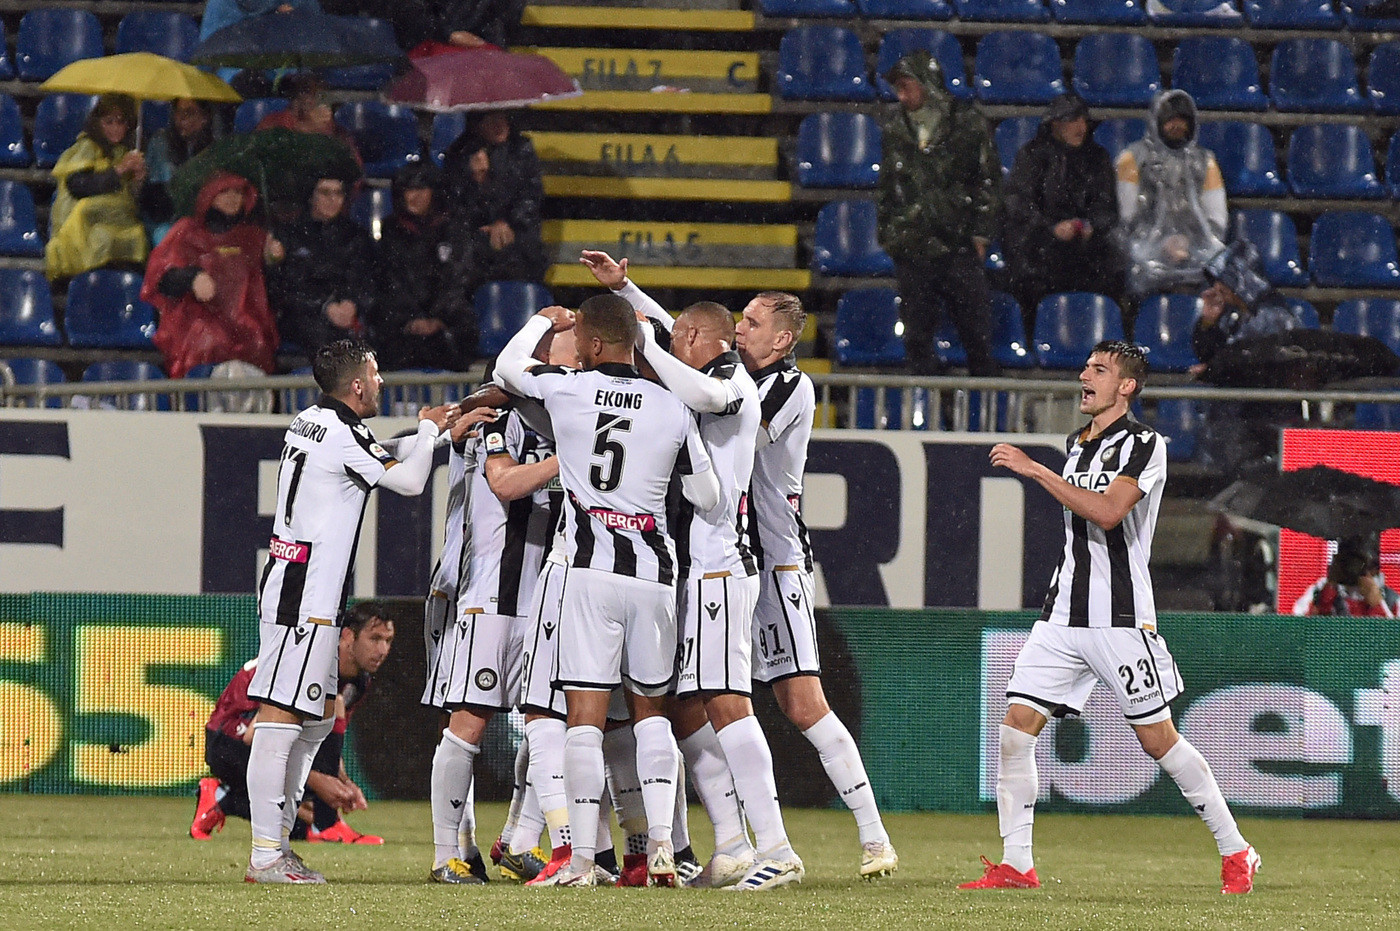 Serie A, Udinese espugna Cagliari in rimonta: alla fine è festa per tutti